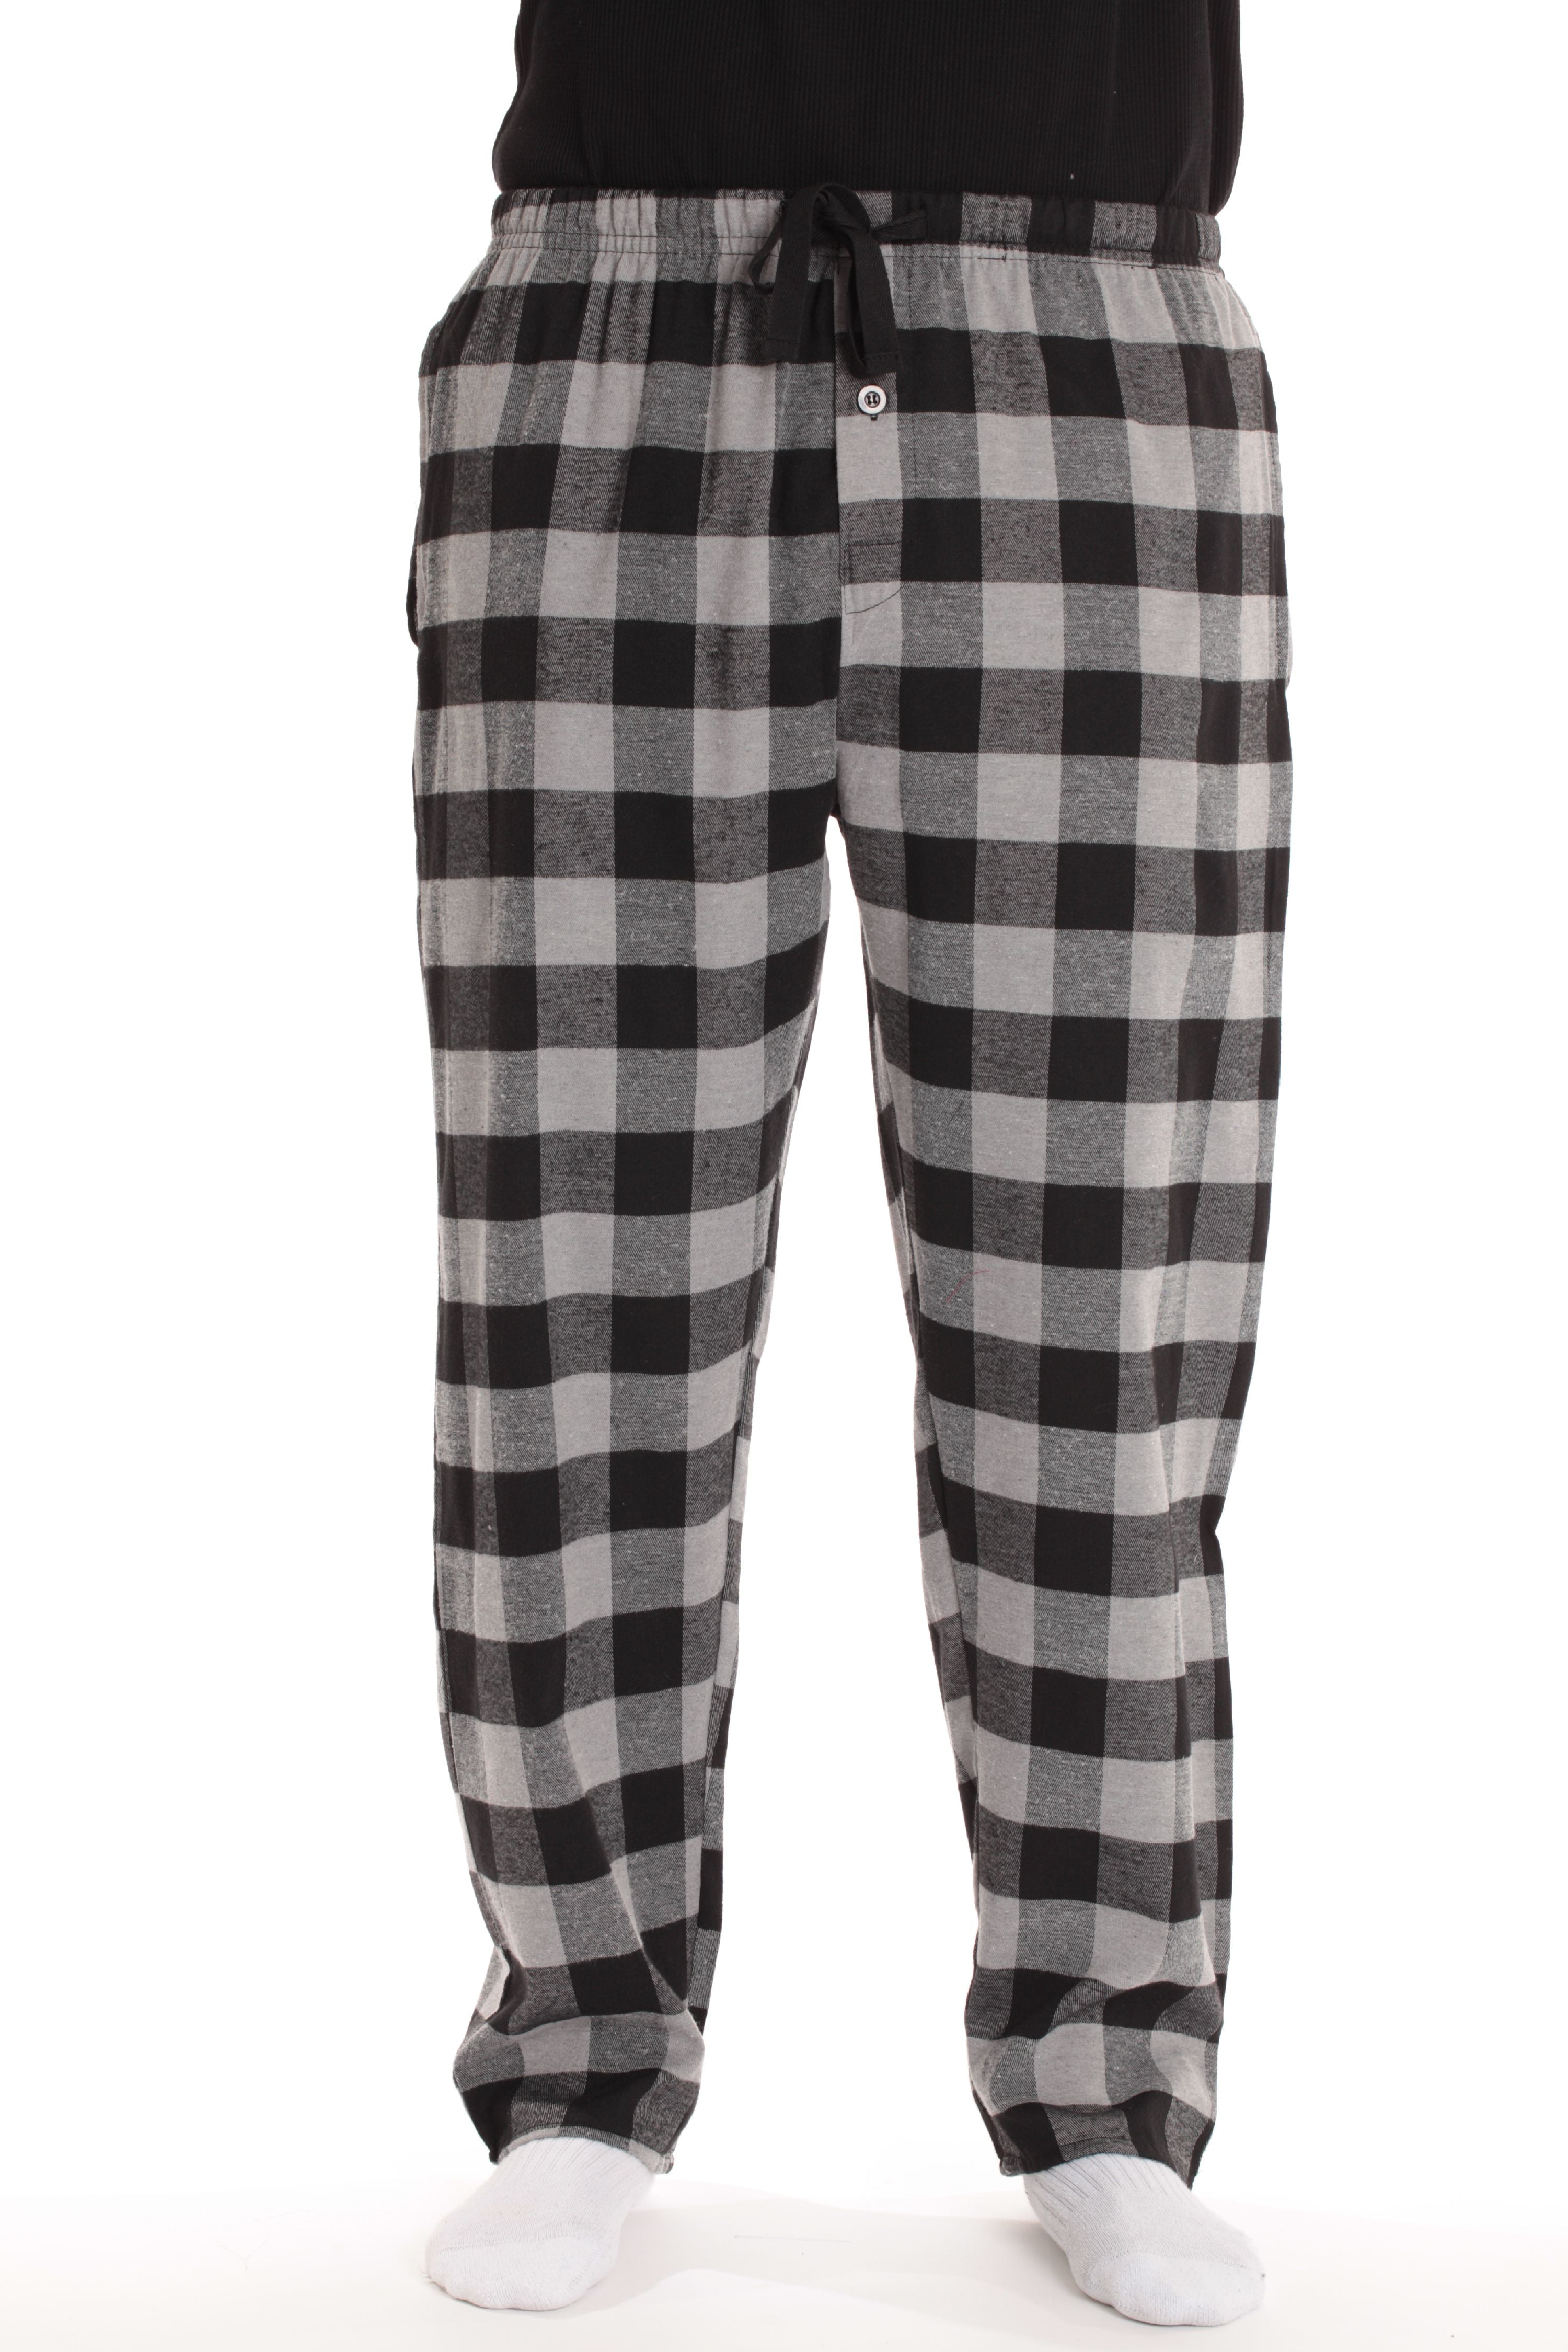 followme Men's Flannel Pajamas - Plaid Pajama Pants for Men - Lounge &  Sleep PJ Bottoms (Grey - Buffalo Plaid, X-Large) 